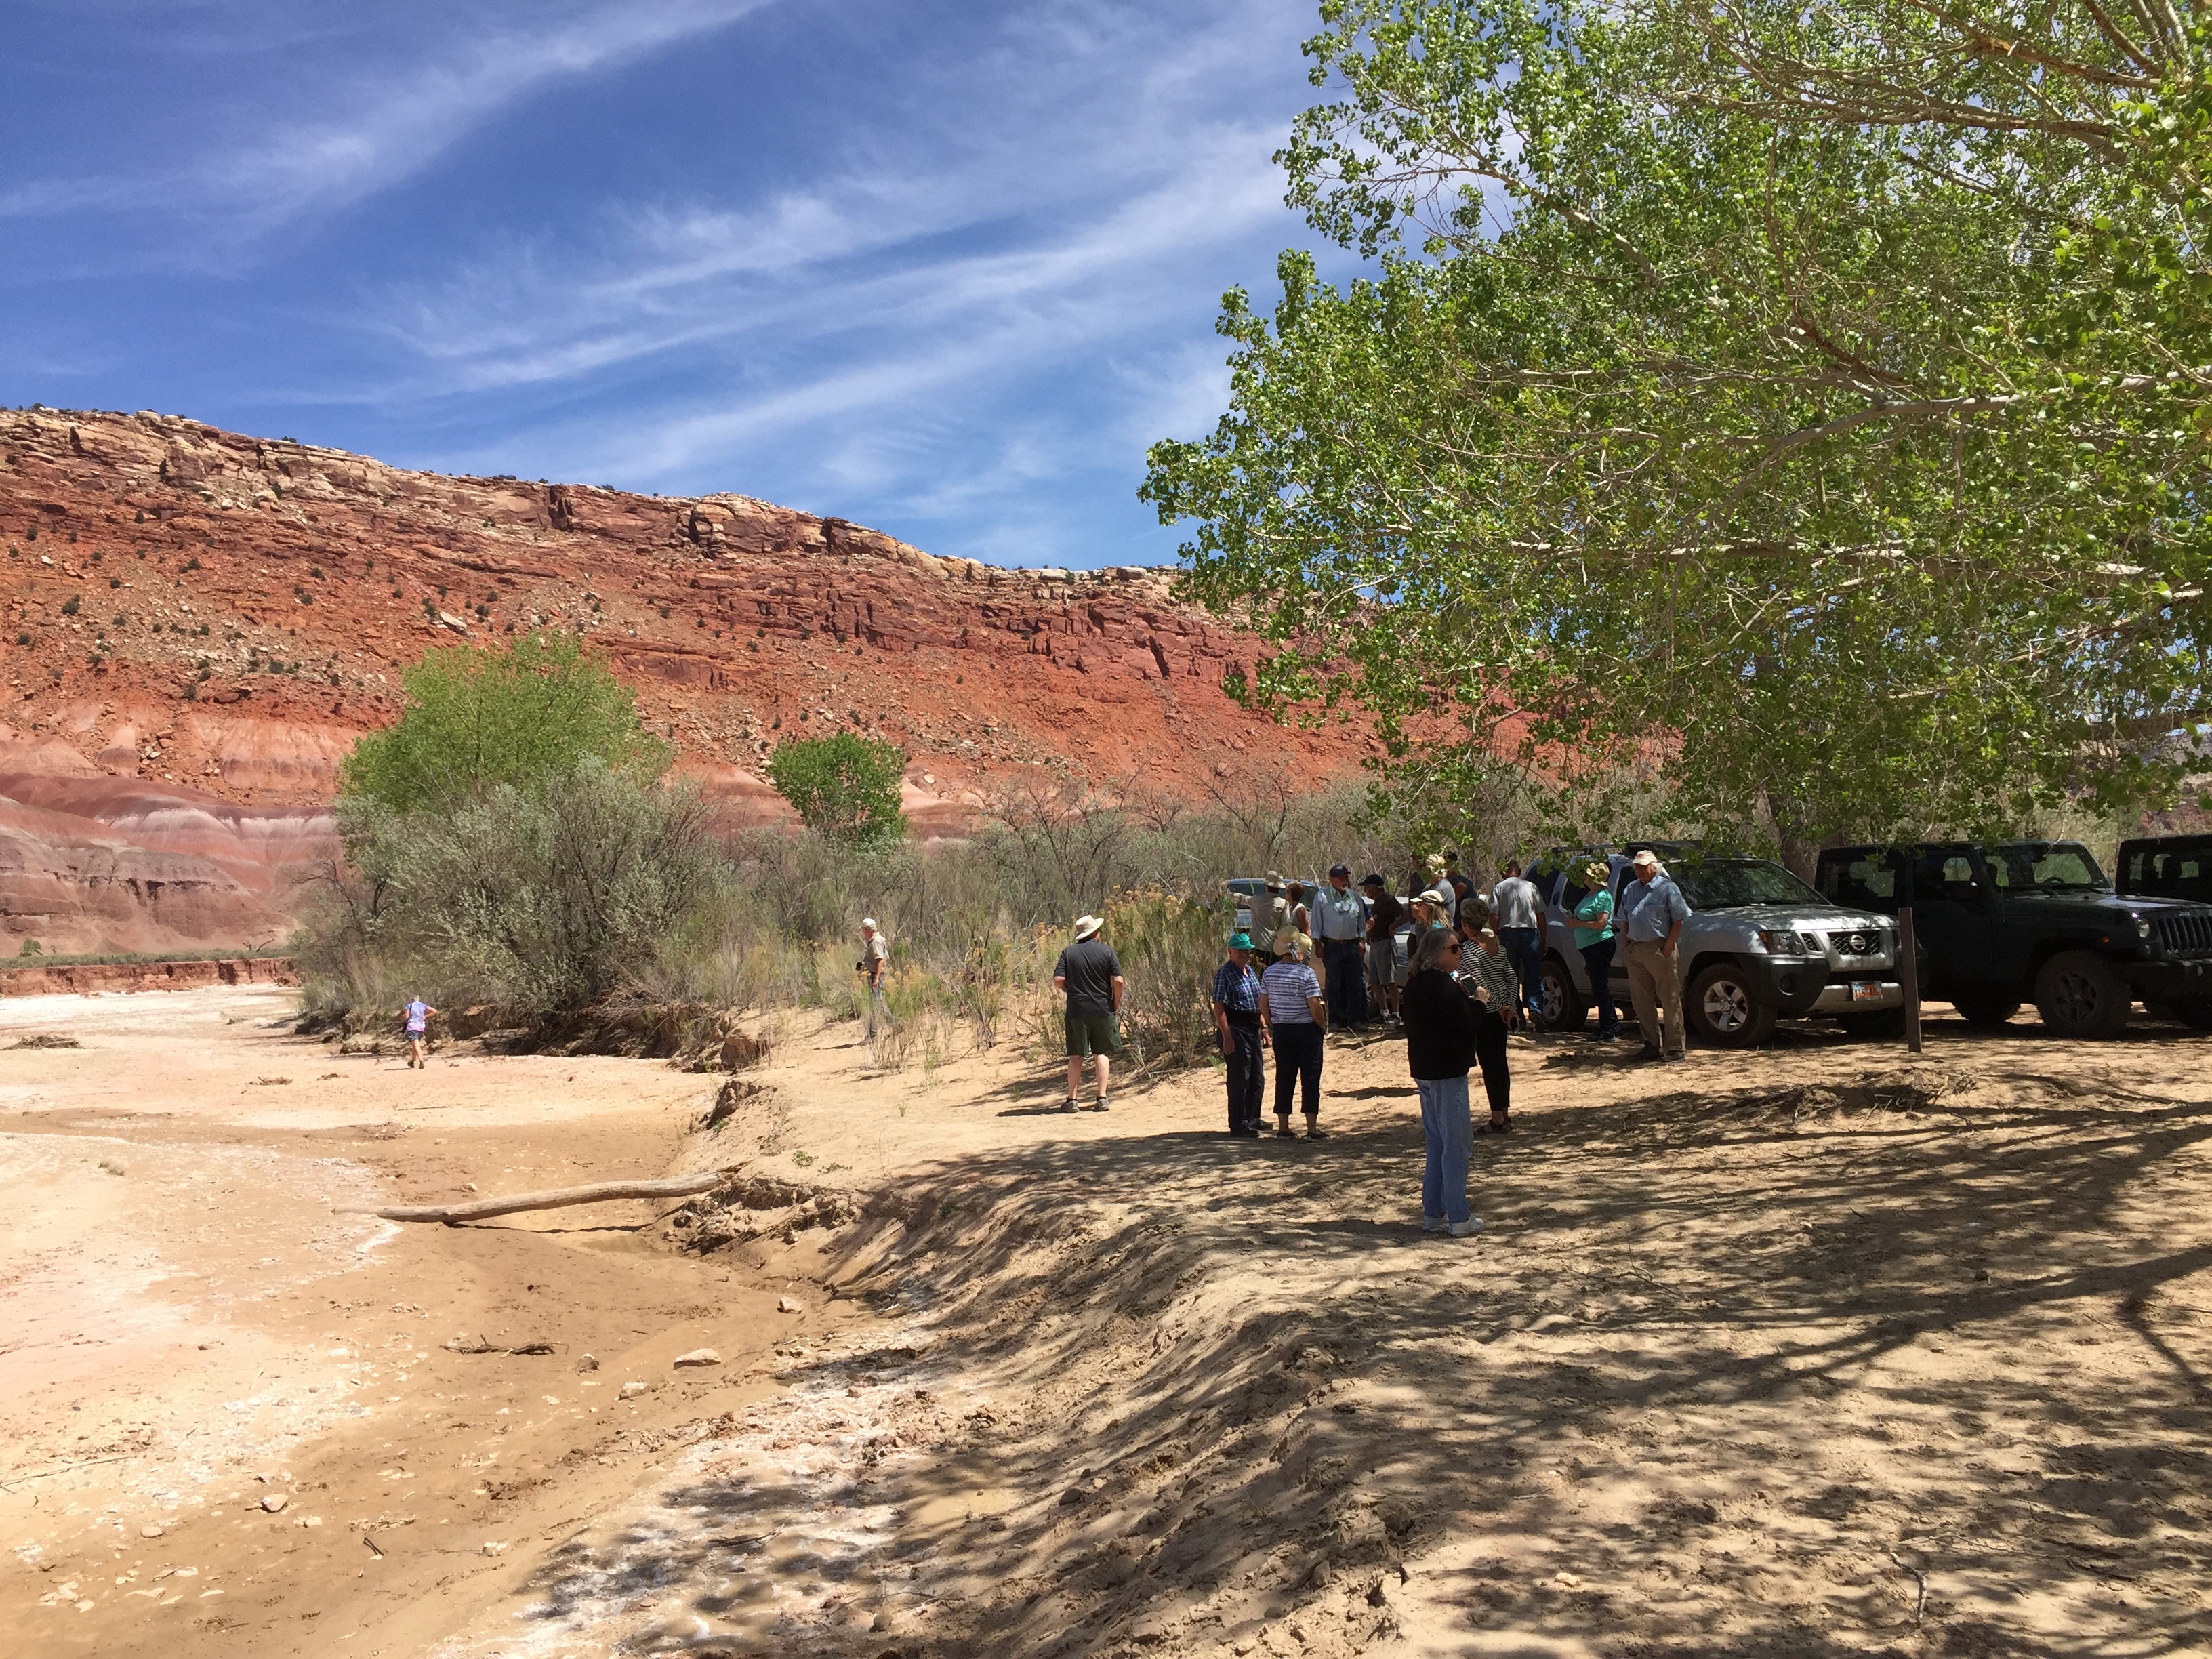 A DASIA field trip group gathered at river's edge in Paria, Utah